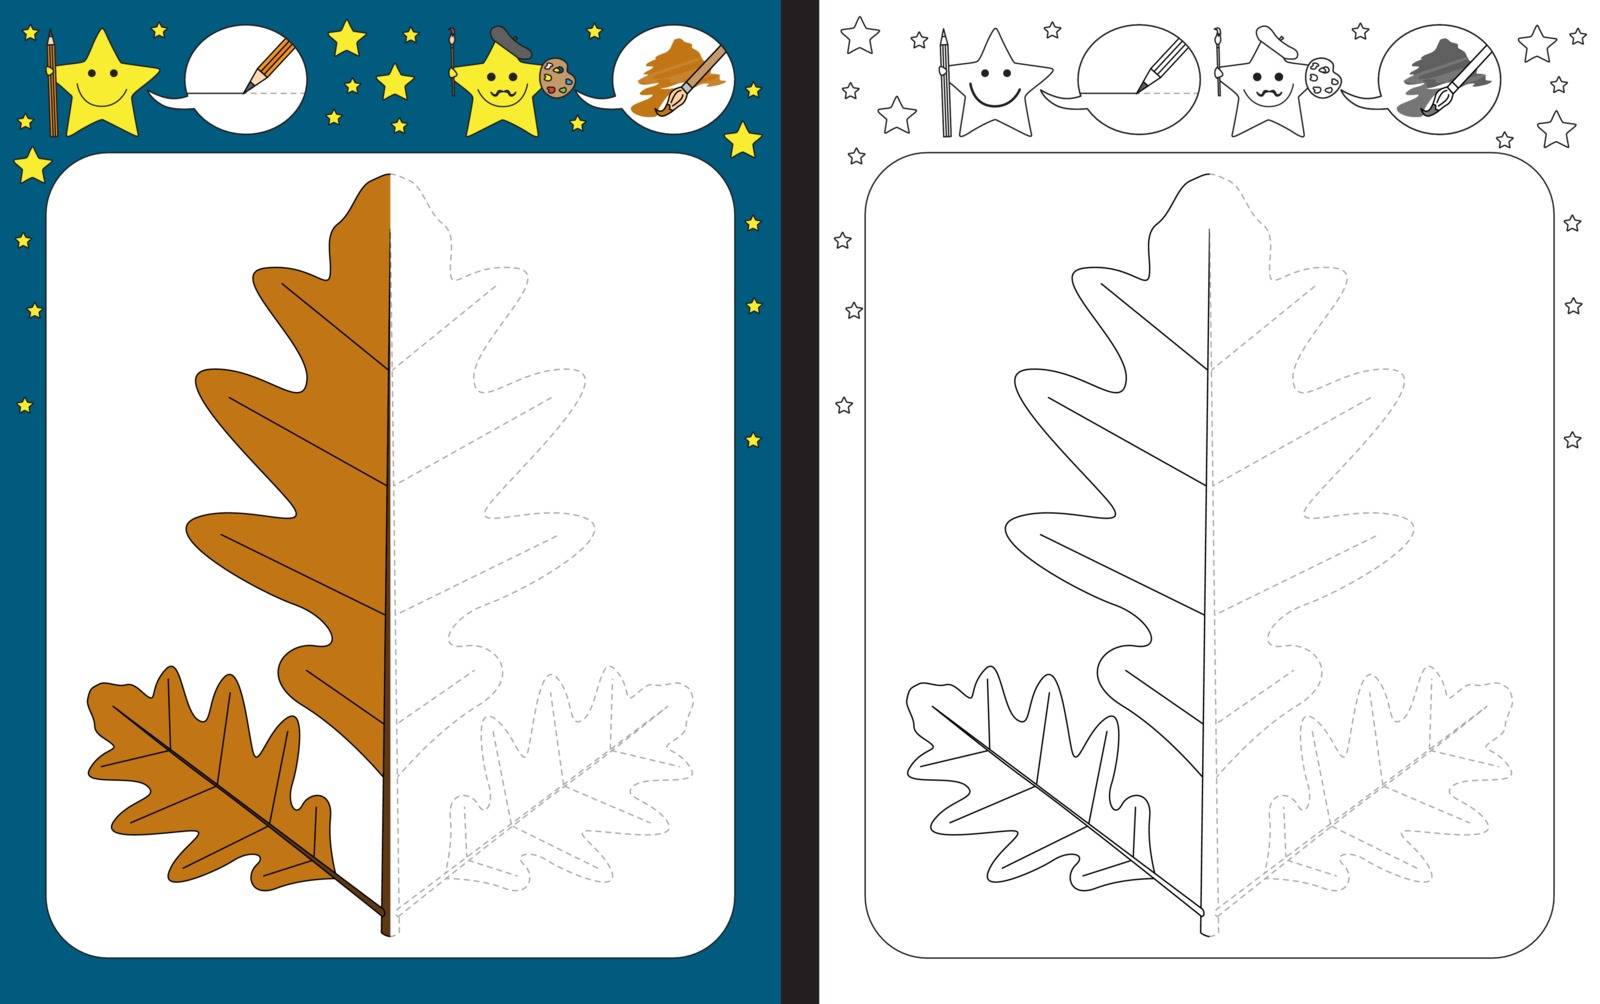 Preschool worksheet for practicing fine motor skills - tracing dashed lines - finish the illustration of oak leaves